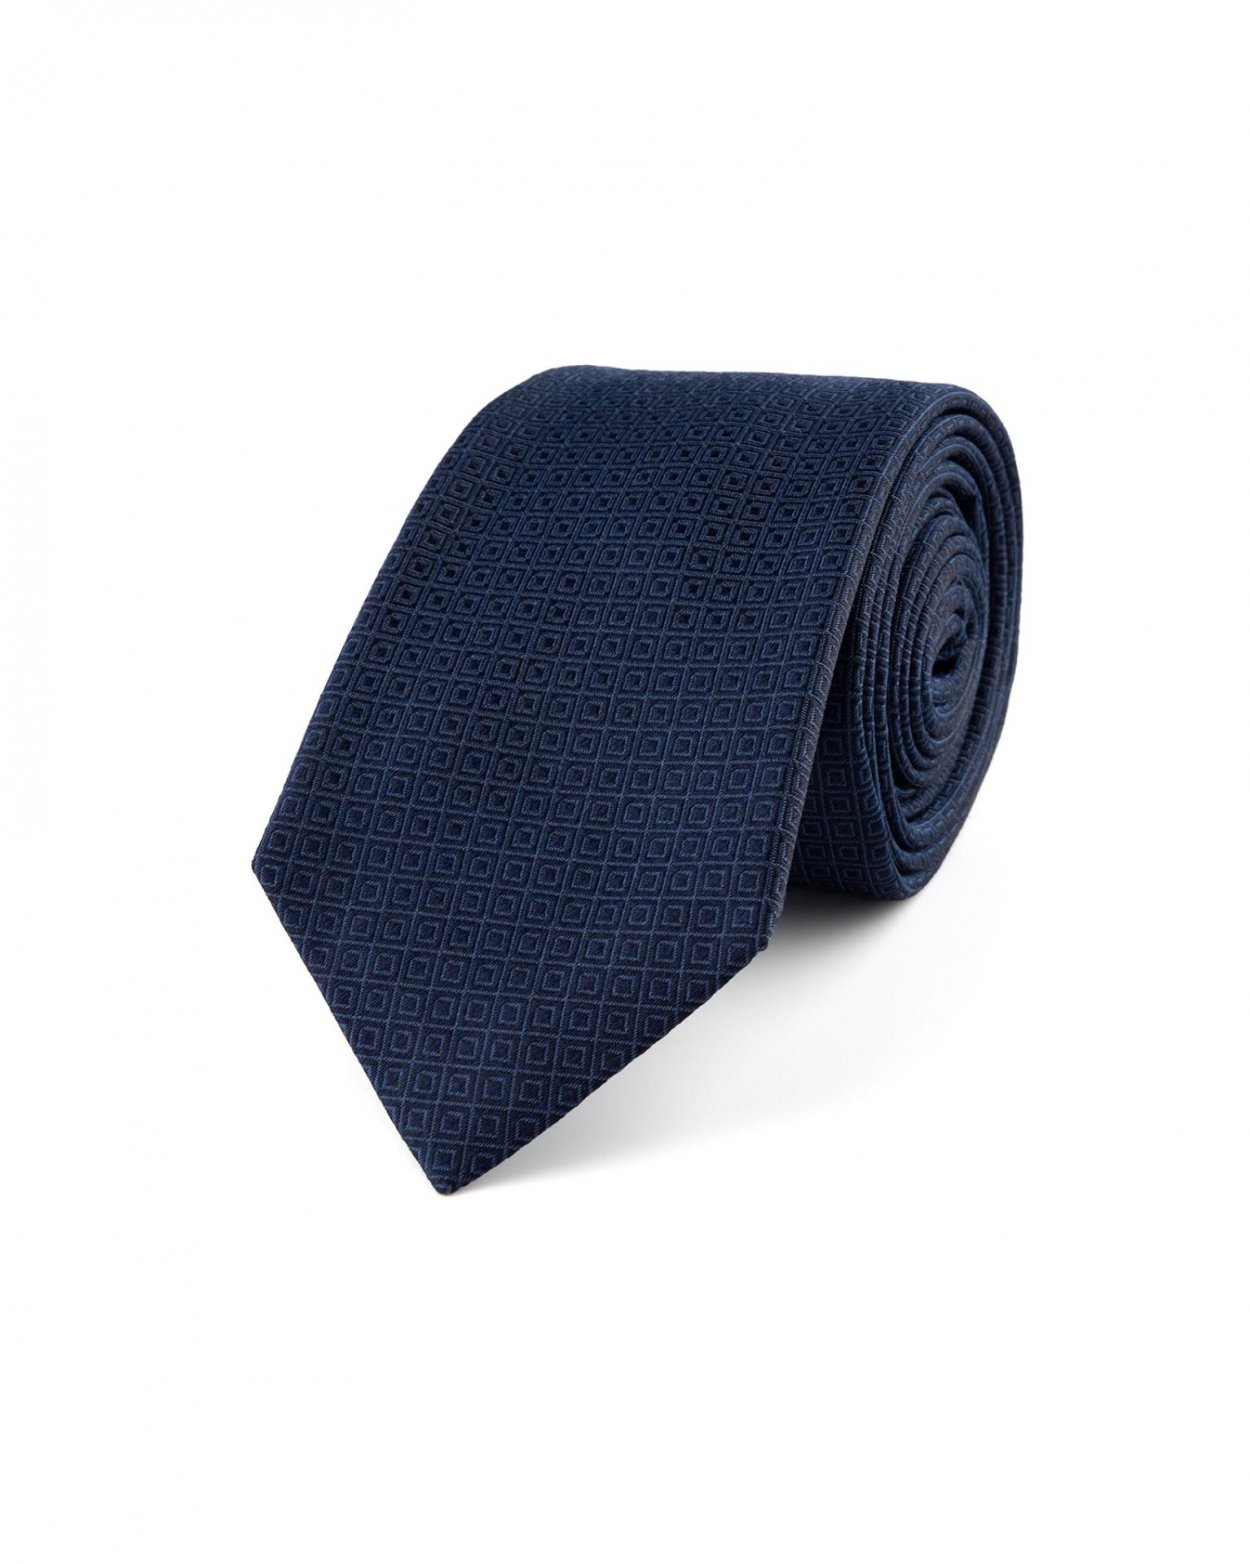 Tmavě modrá hedvábná kravata